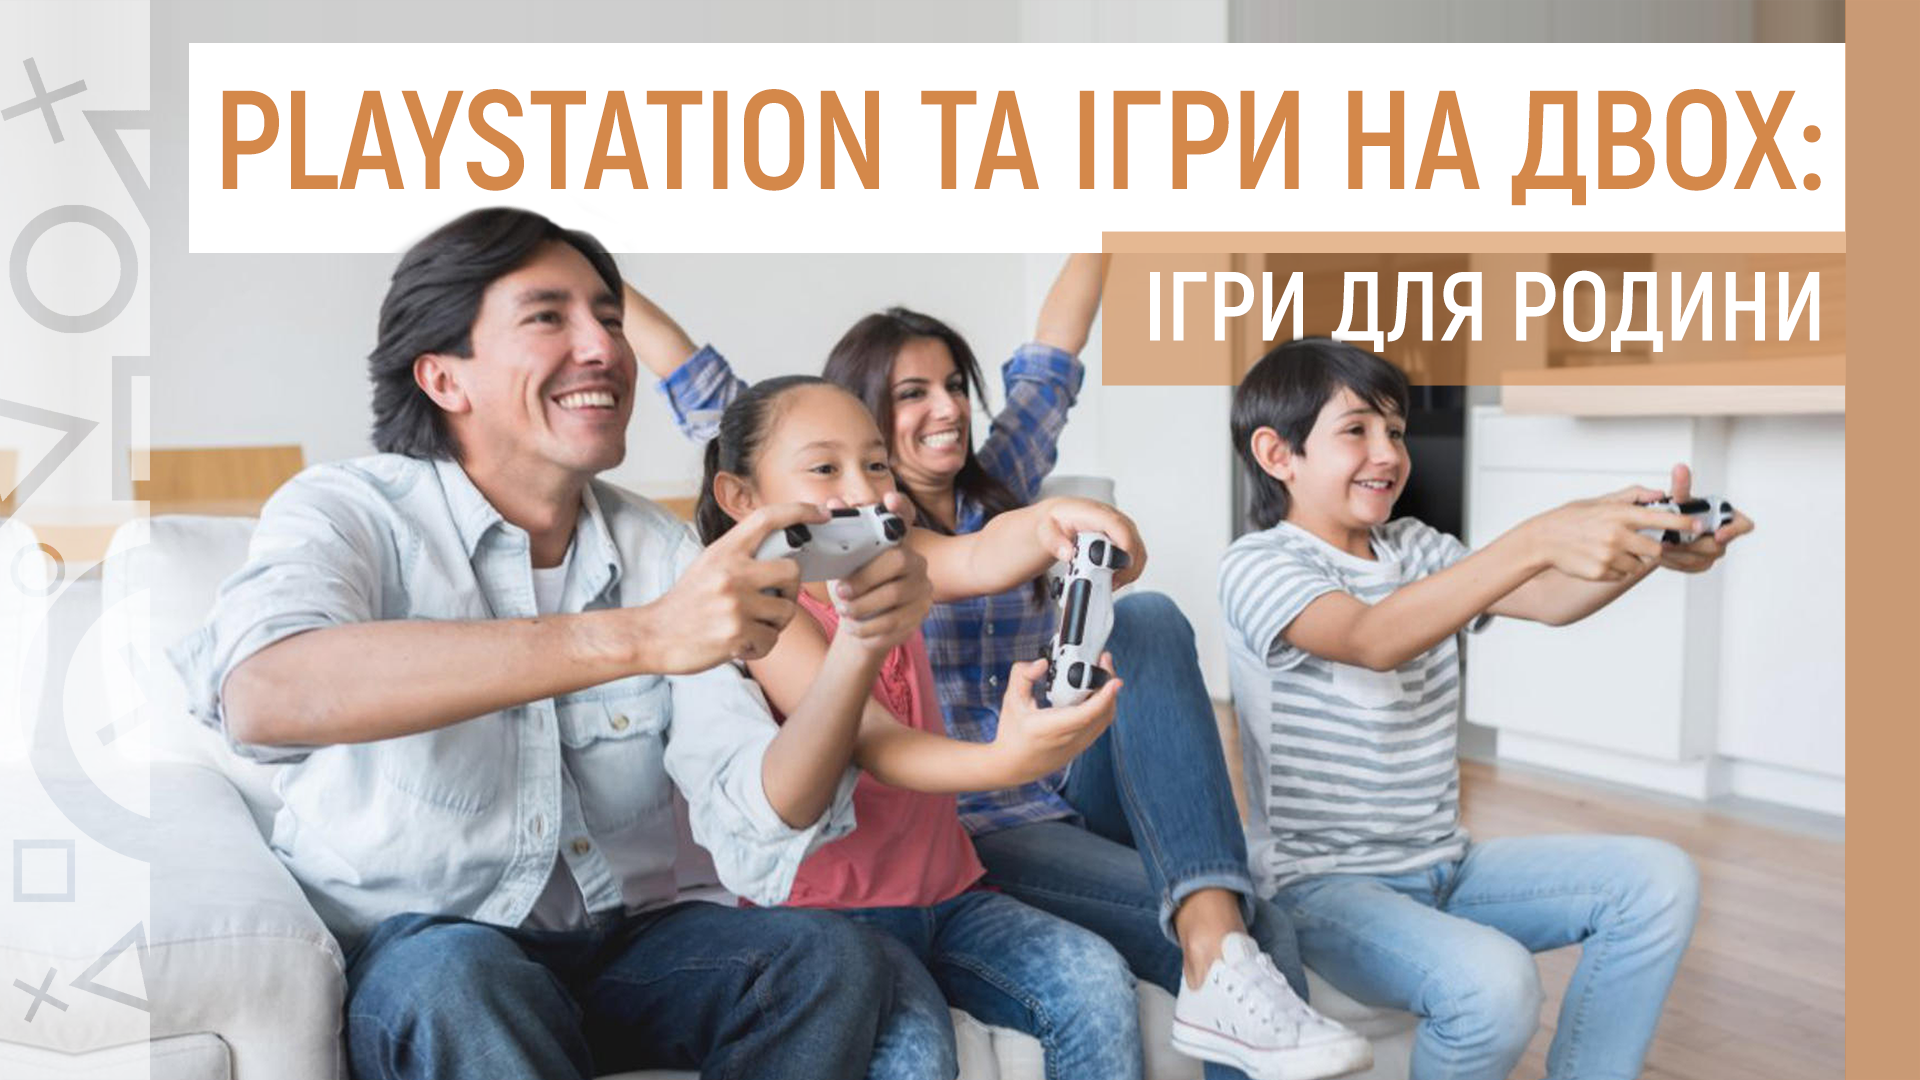 🎮 Playstation ta igry na dvoh: igry dlja rodyny 